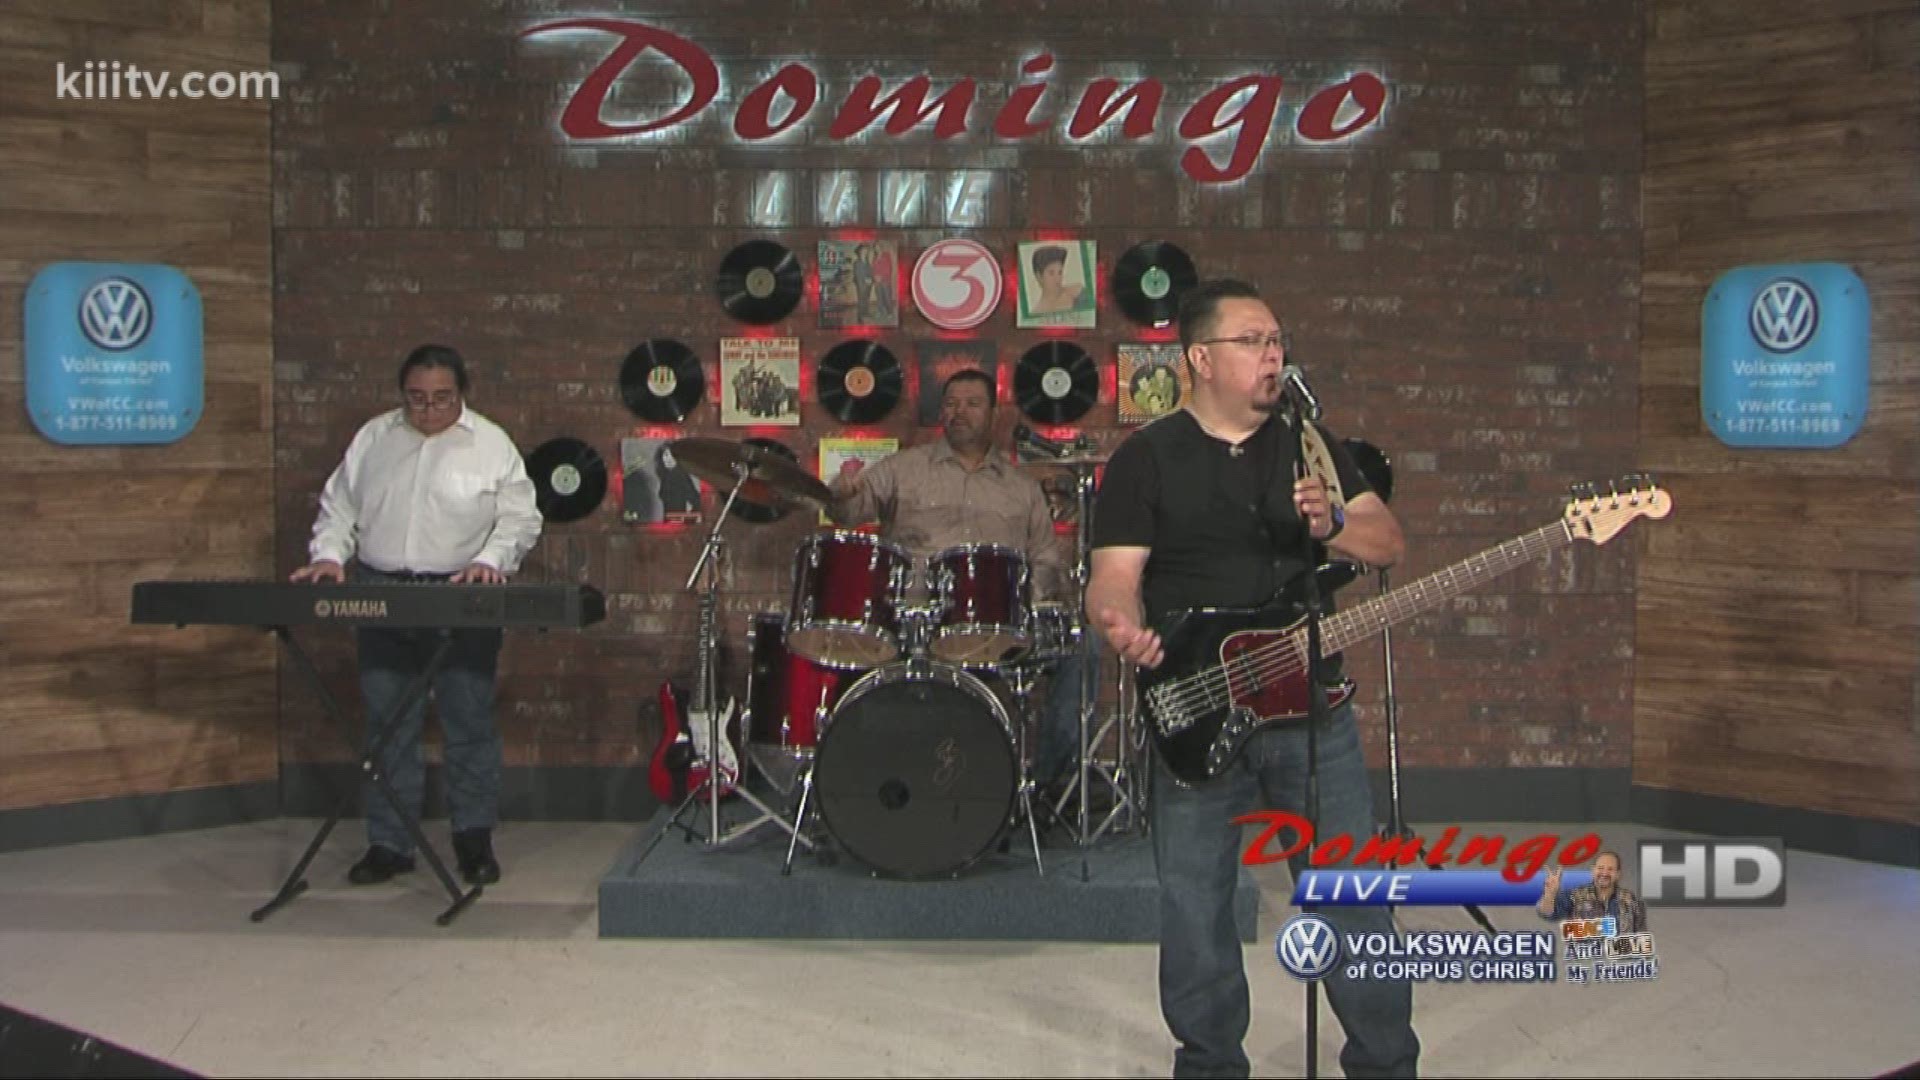 David Lee Rodriguez performing "Fantasia" on Domingo Live.